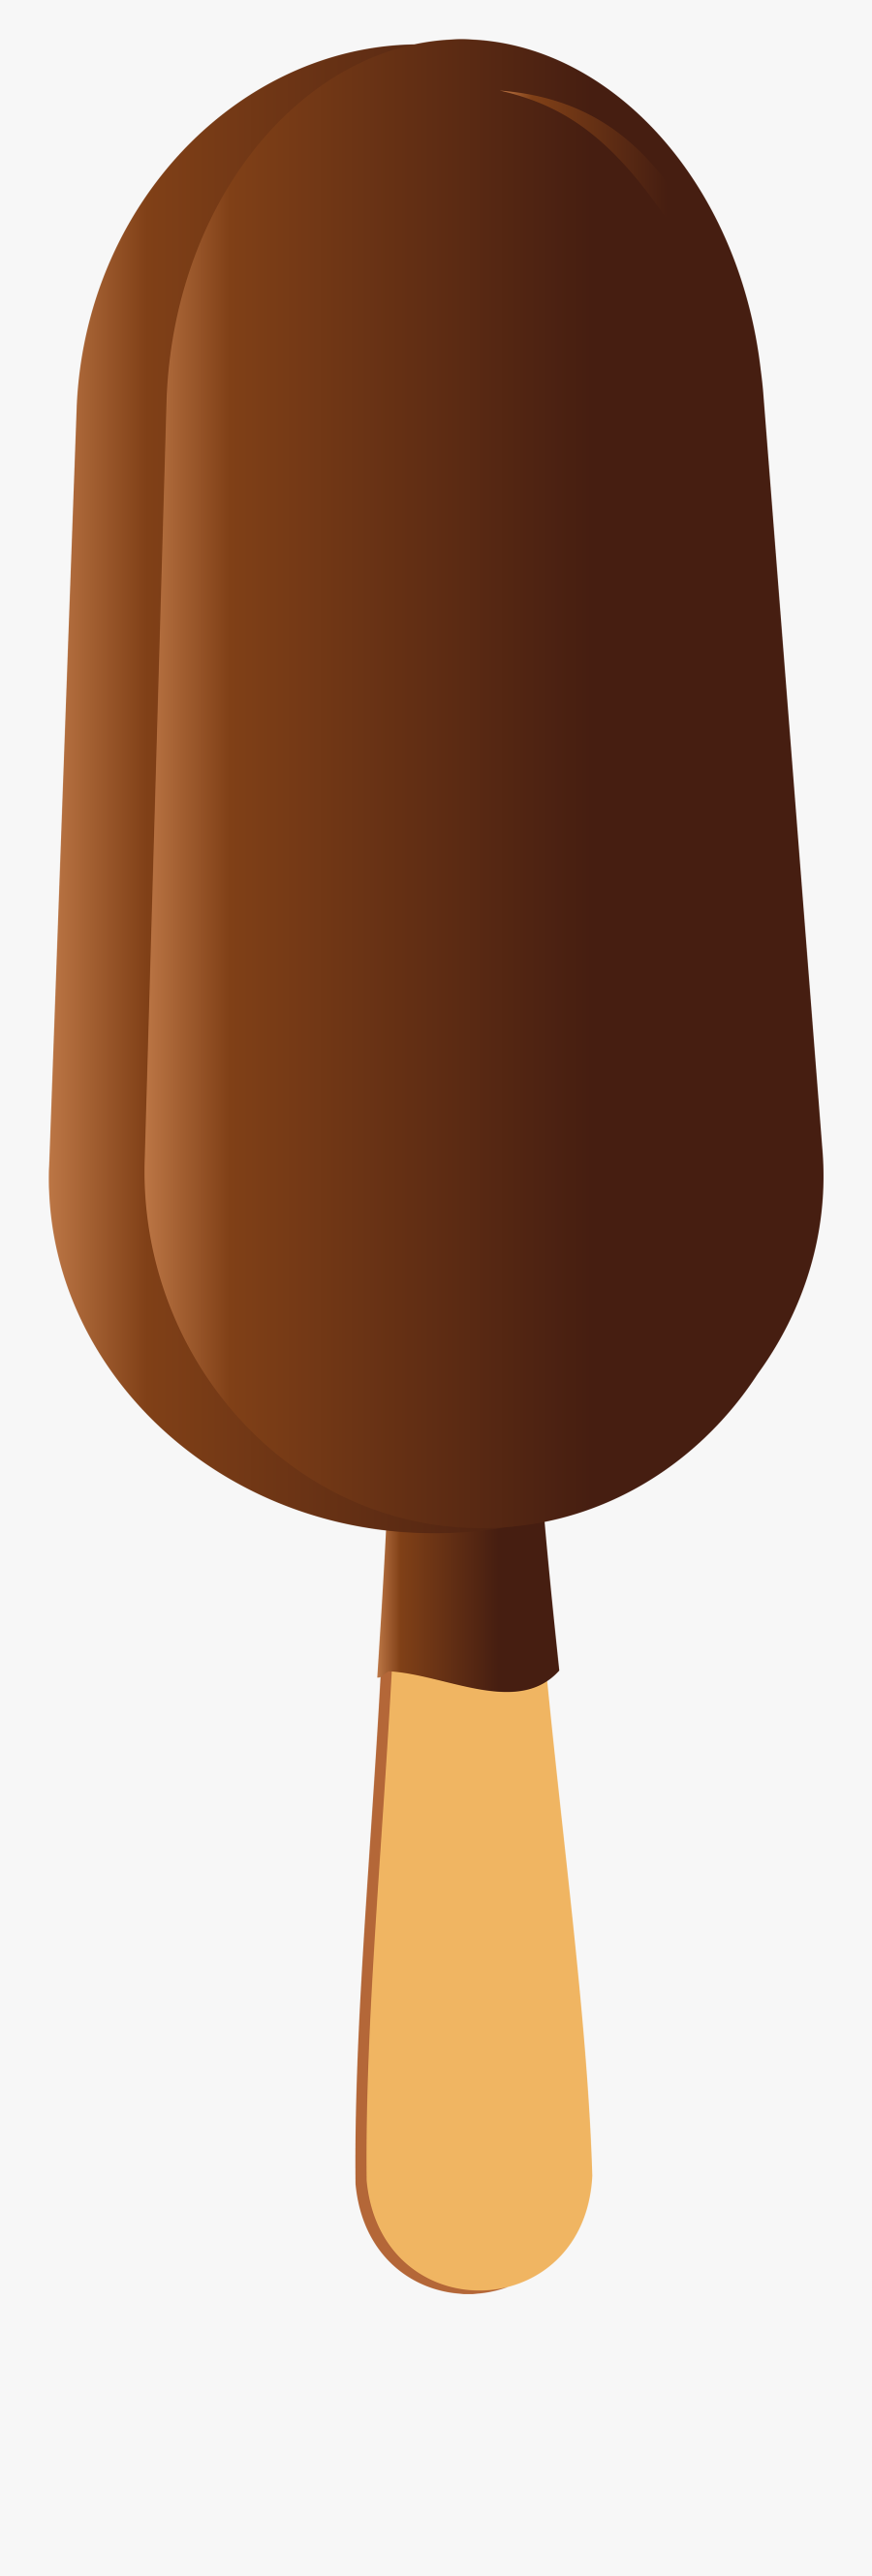 Popsicle Clipart Ice Pops - Ice Cream Stick Clipart, Transparent Clipart